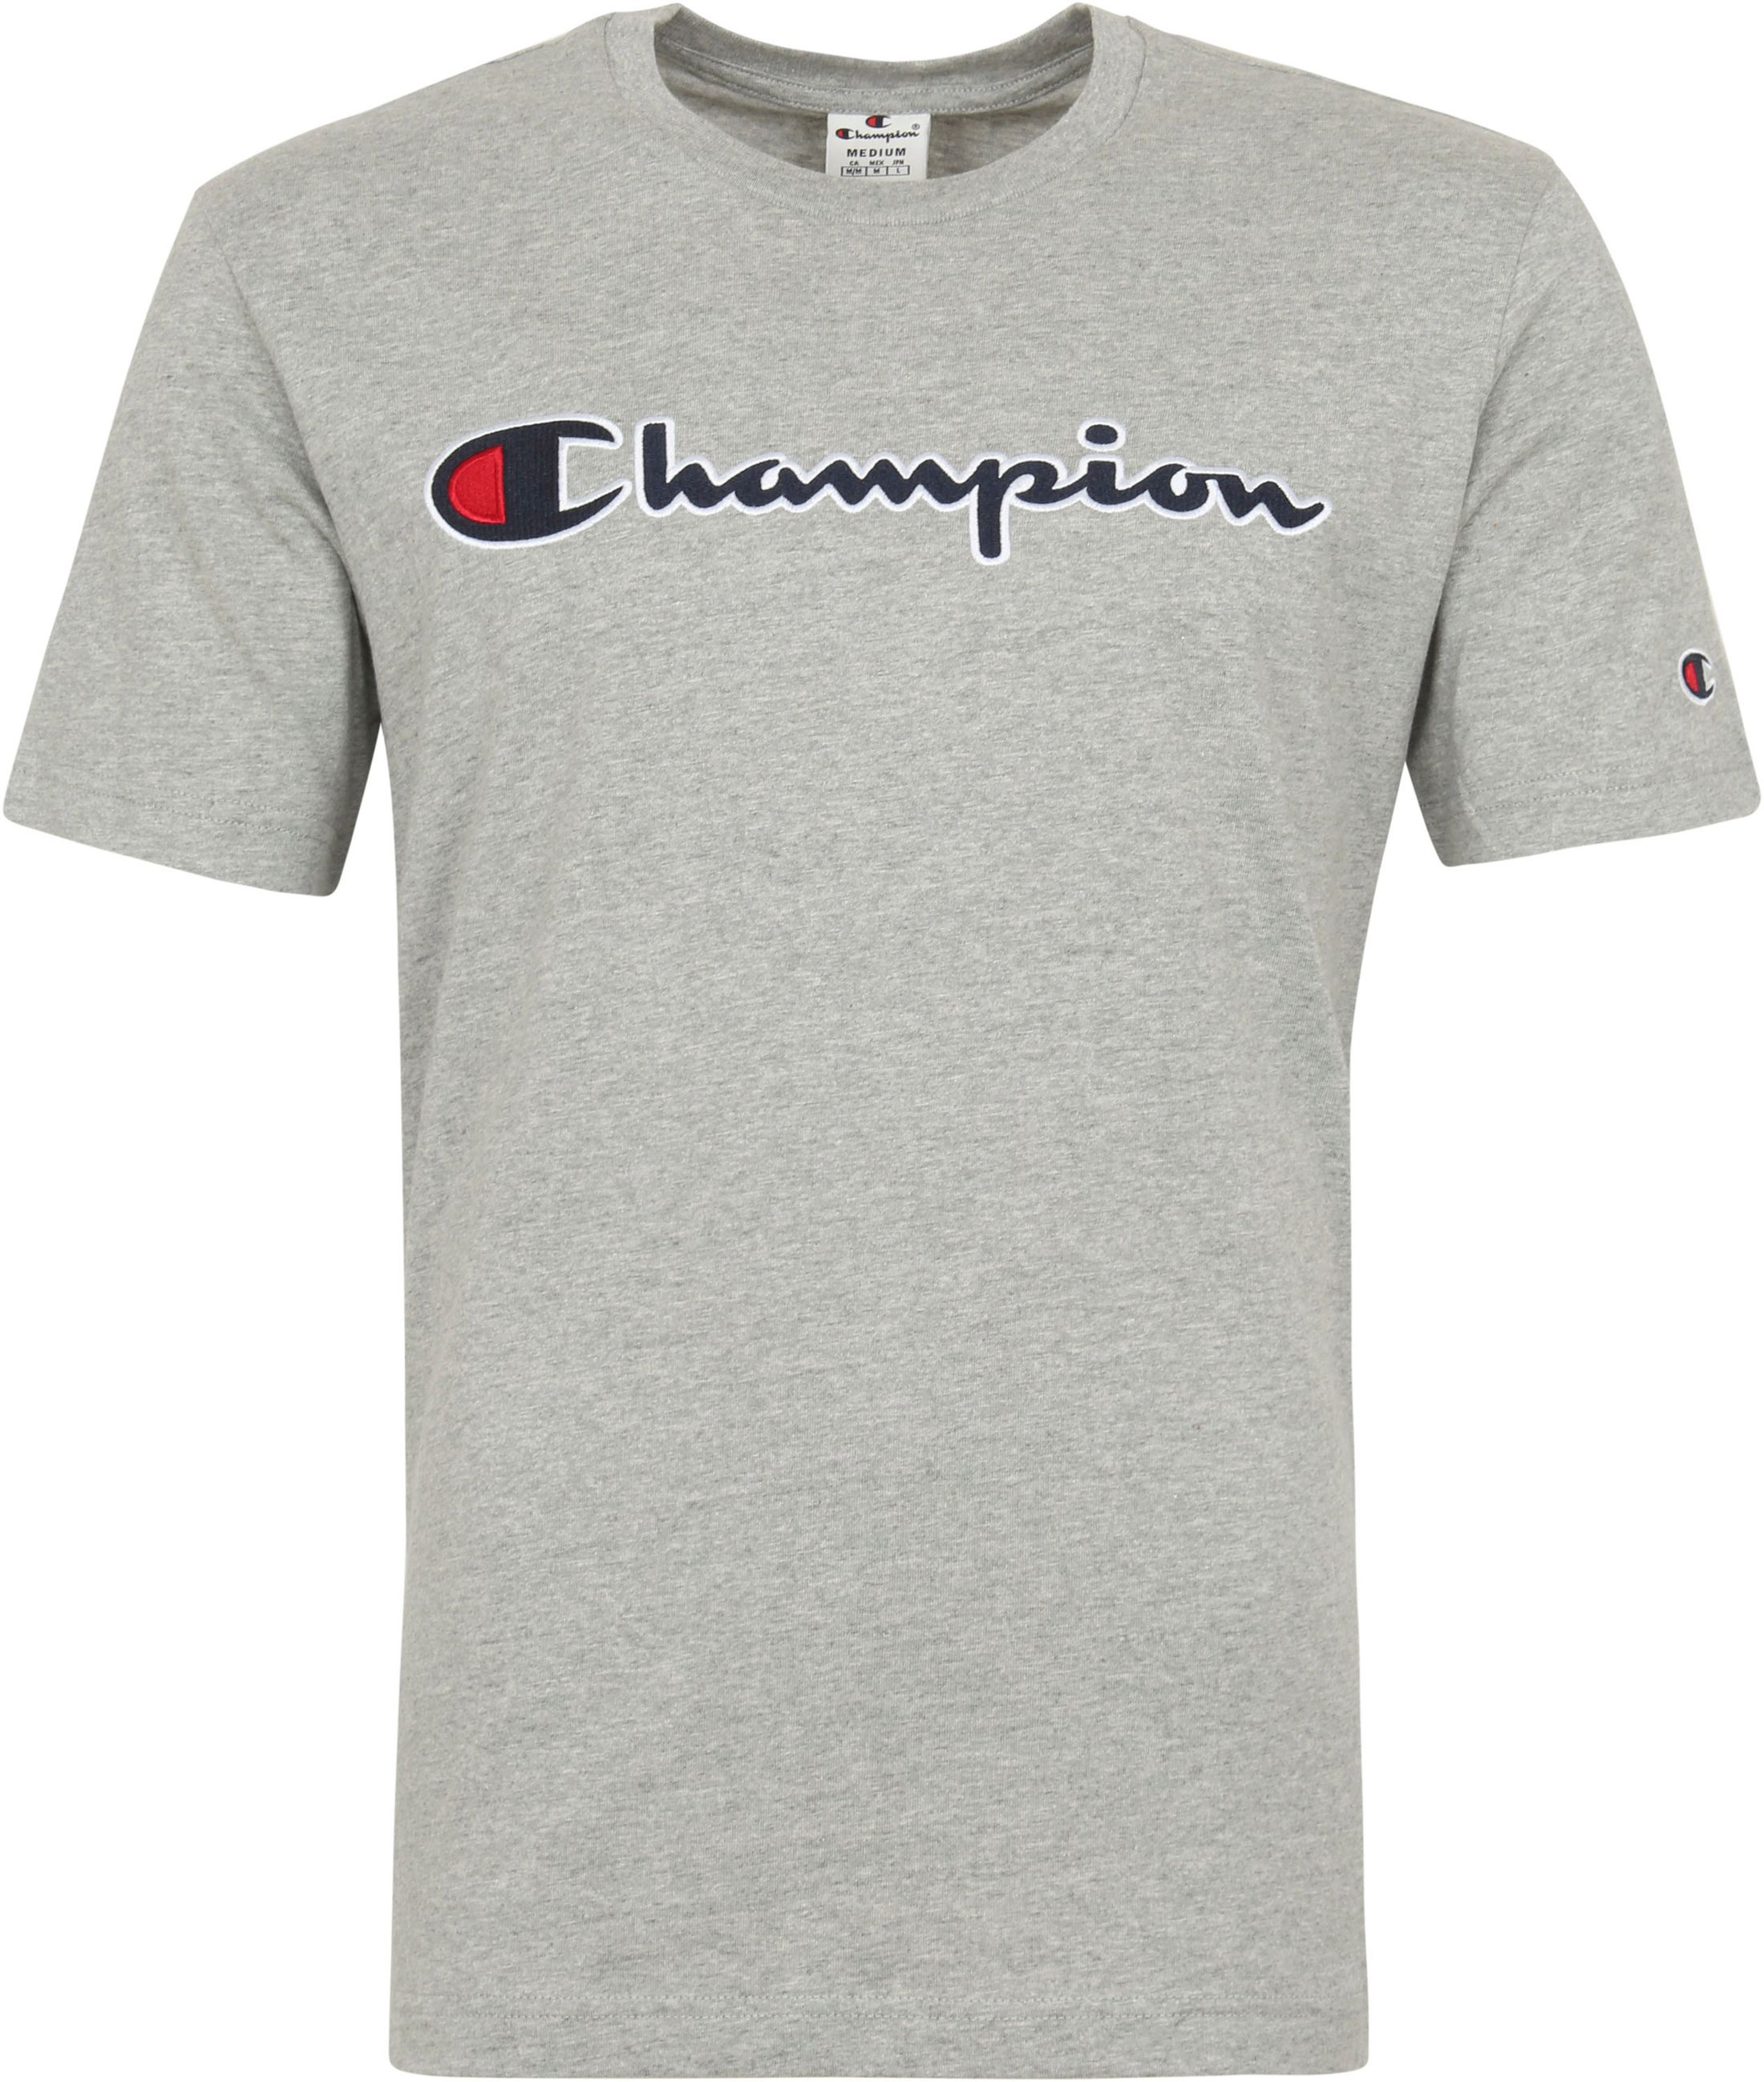 Champion T-Shirt Logo Grey size L